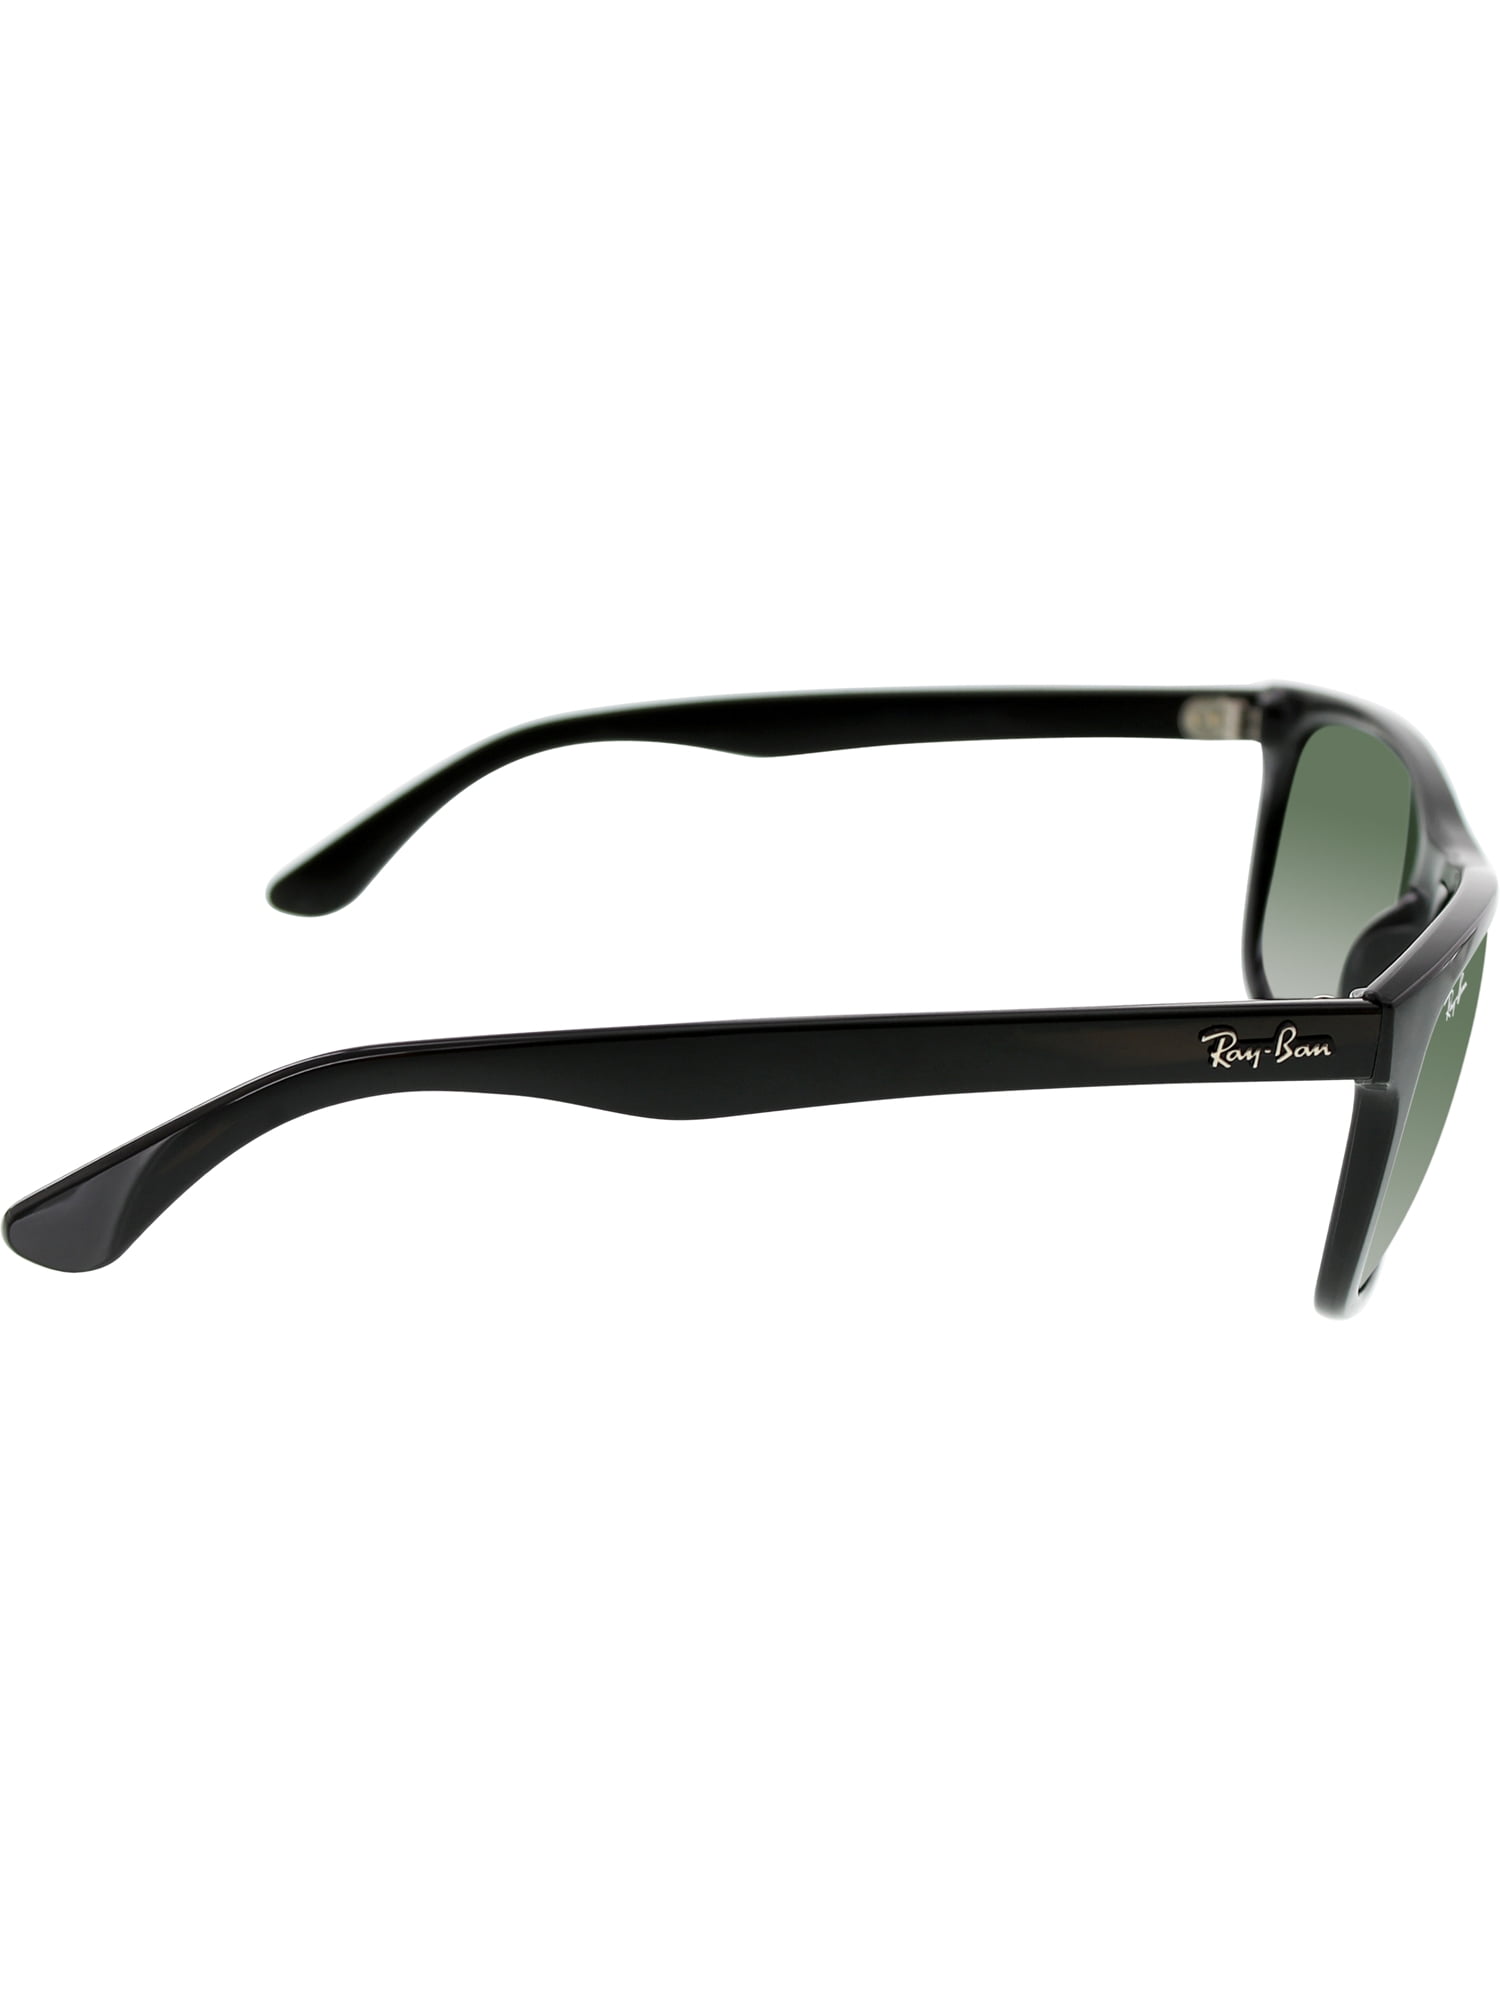 reflective wayfarer sunglasses